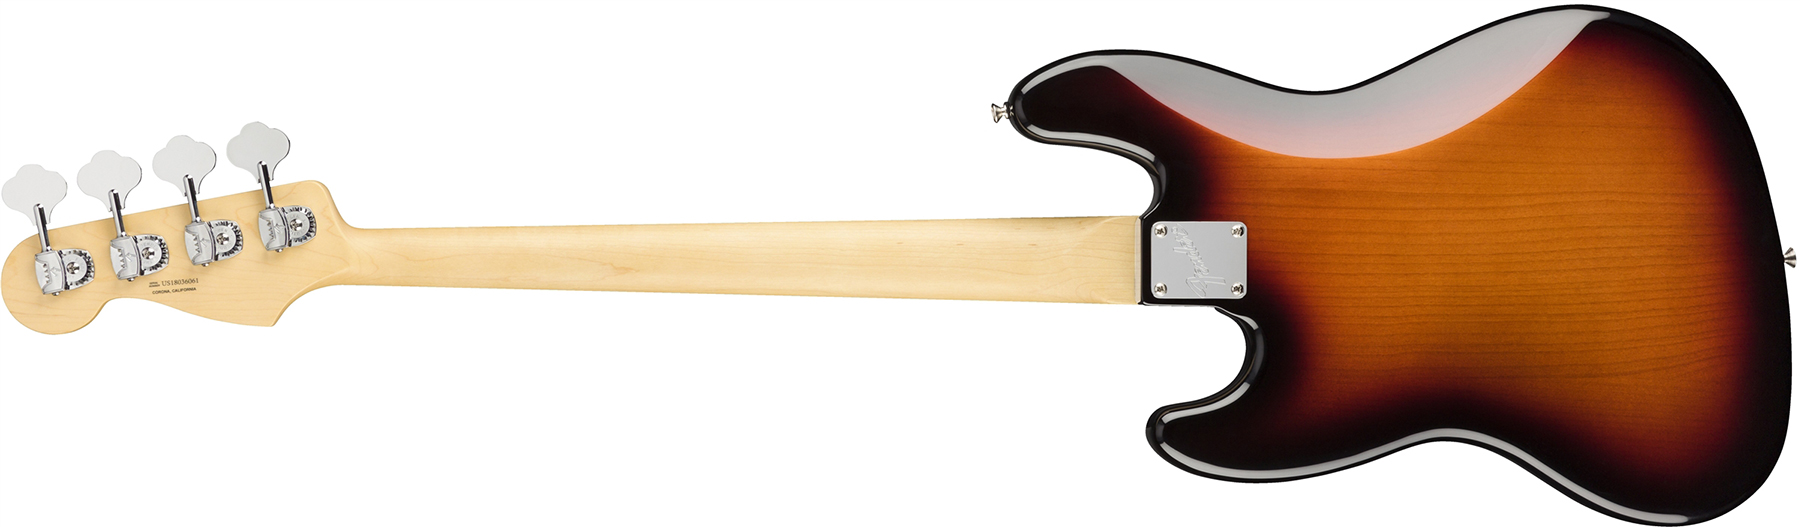 Fender Jazz Bass American Performer Usa Rw - 3-color Sunburst - Solid body electric bass - Variation 1